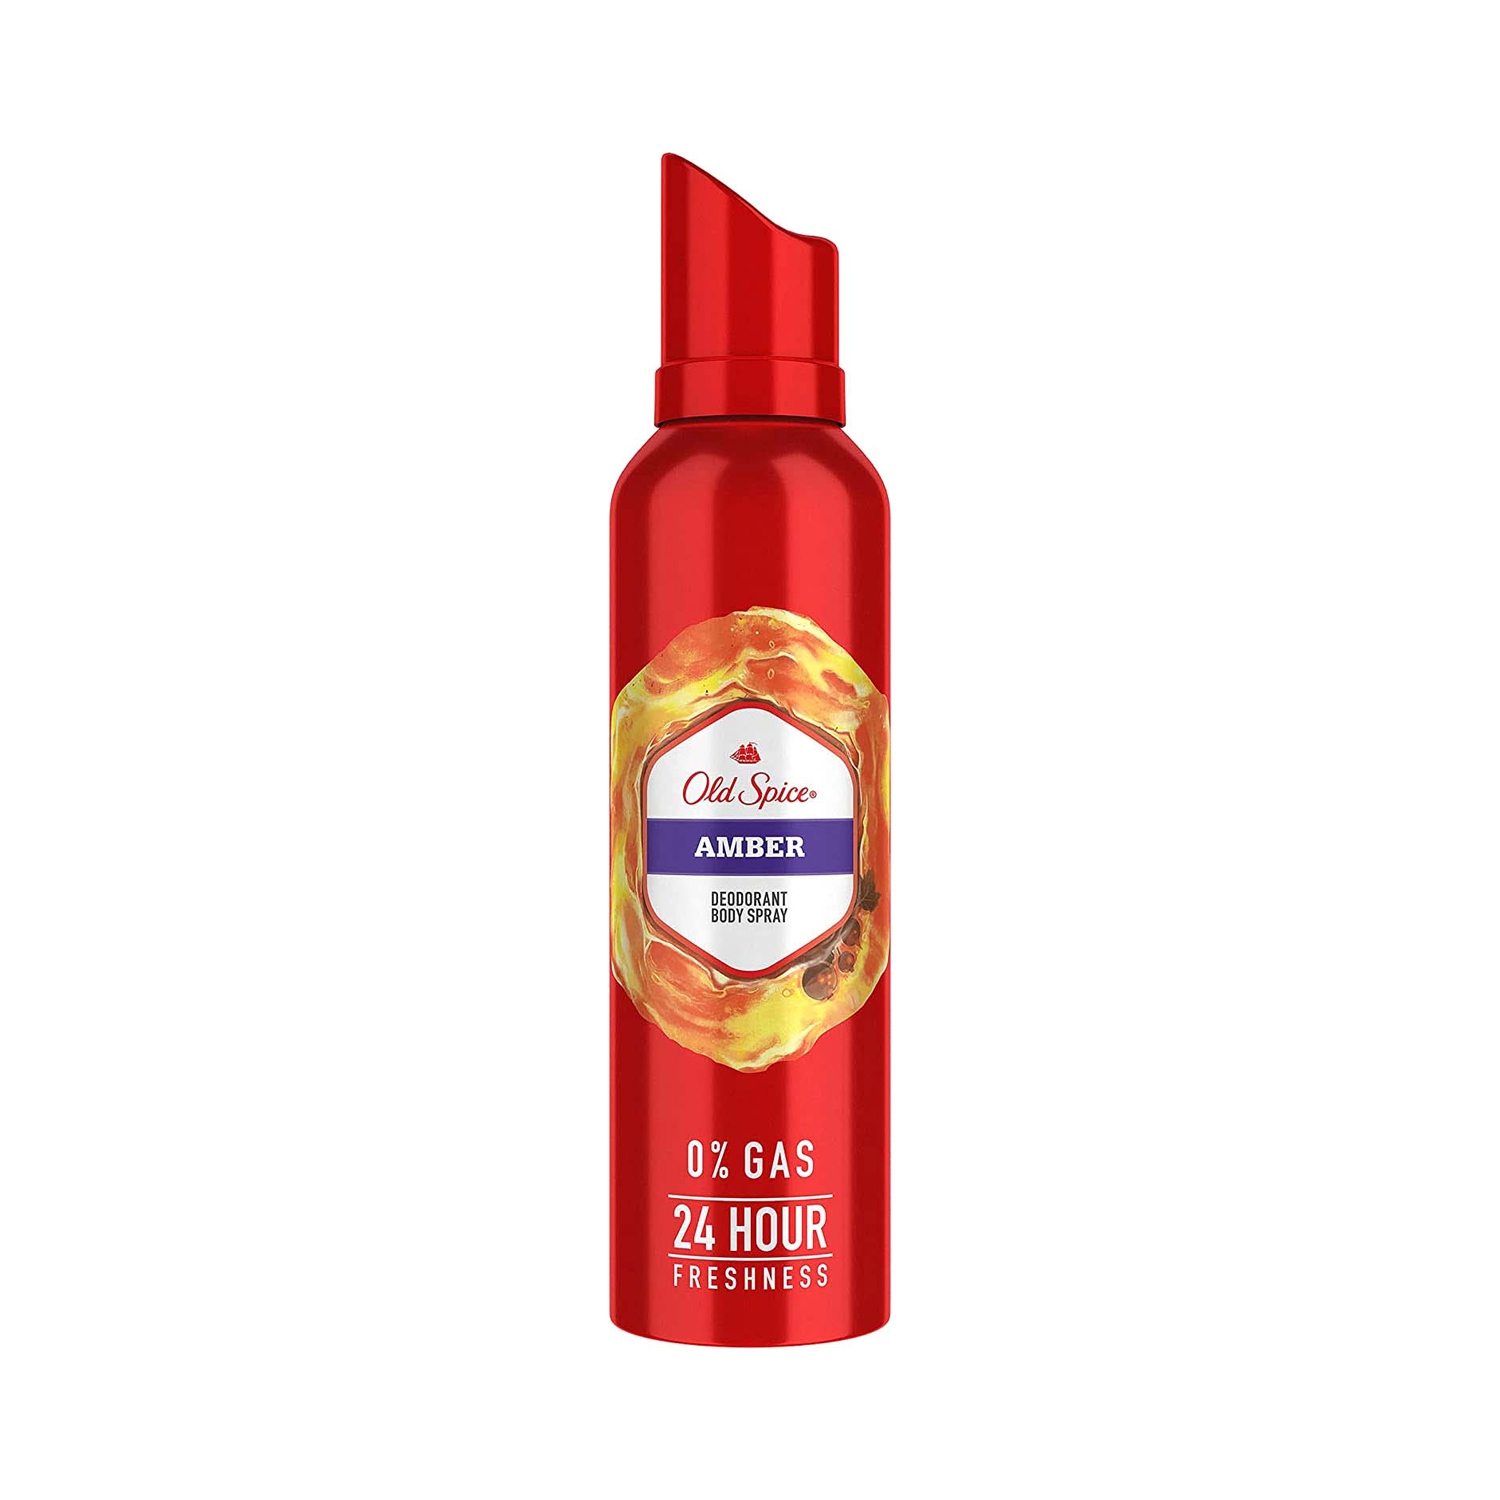 Old Spice | Old Spice Amber No Gas Deodorant Body Spray (140ml)